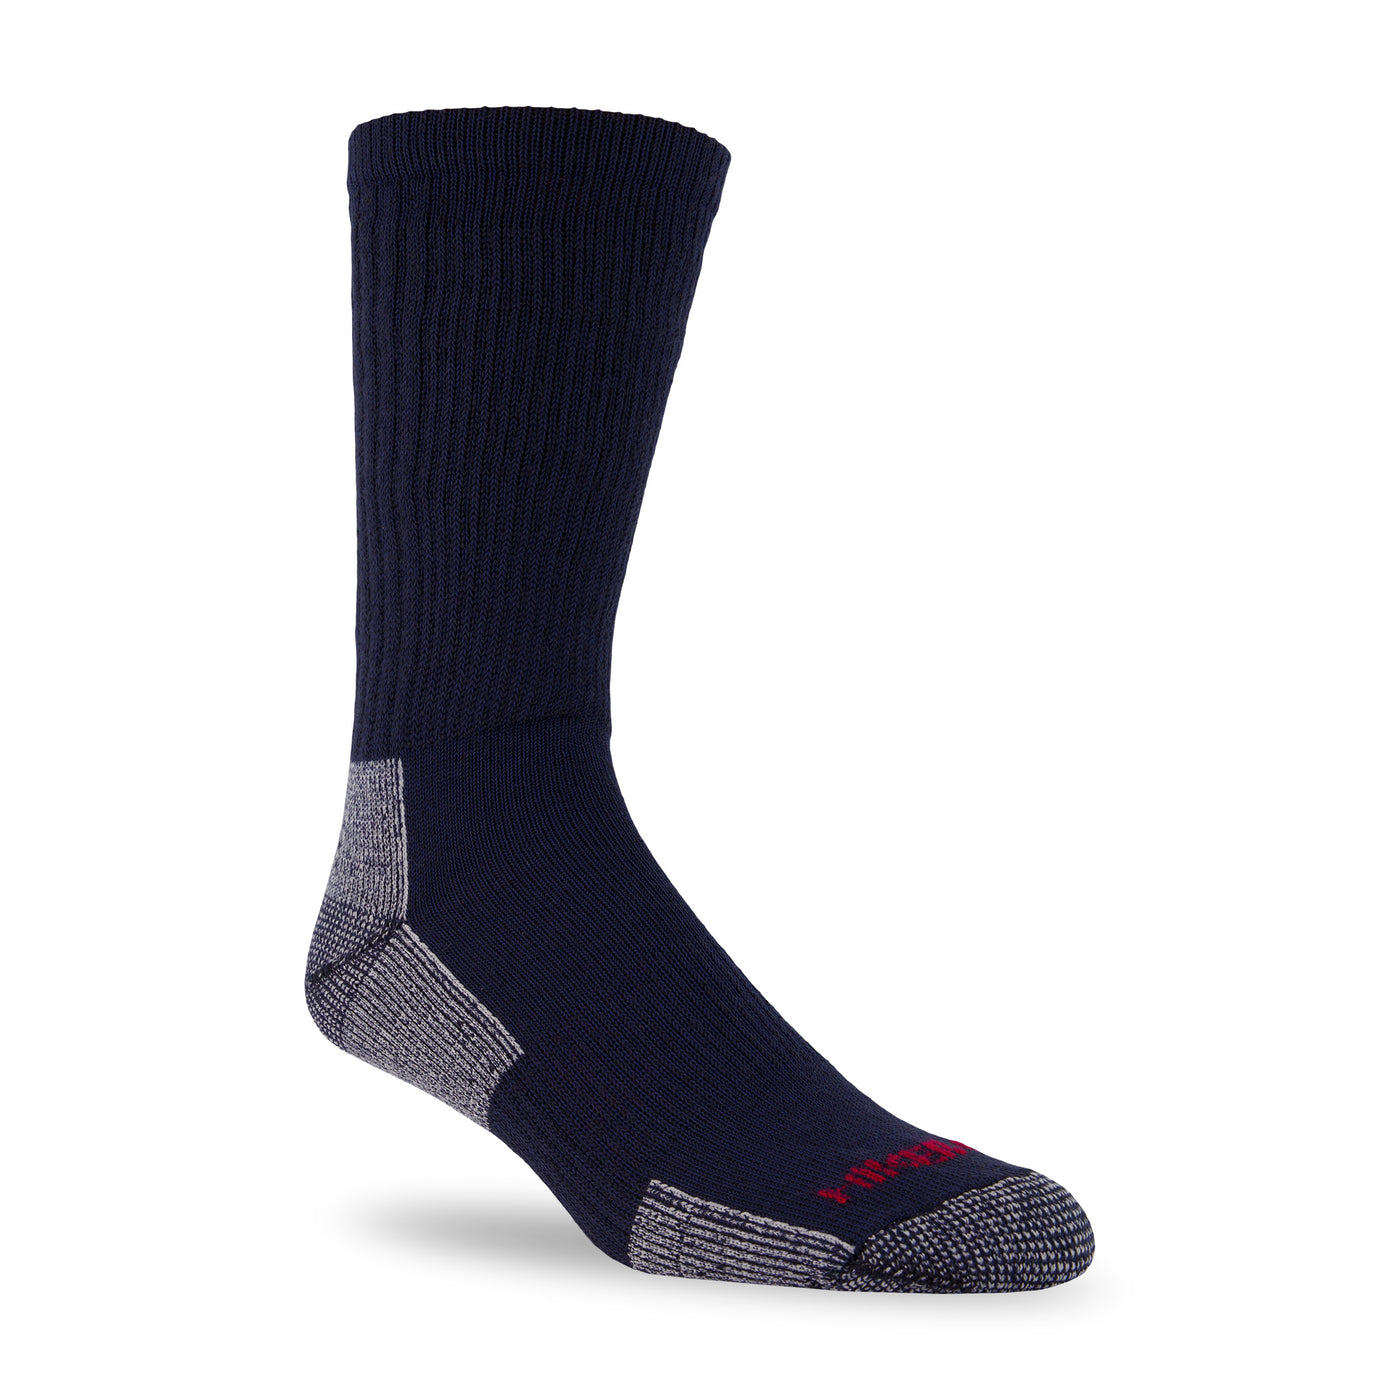 3 PAIR - J.B. Field's "Hiker GX" Merino Wool Hiking Sock (SLIGHTLY IMPERFECT) - NEUTRAL